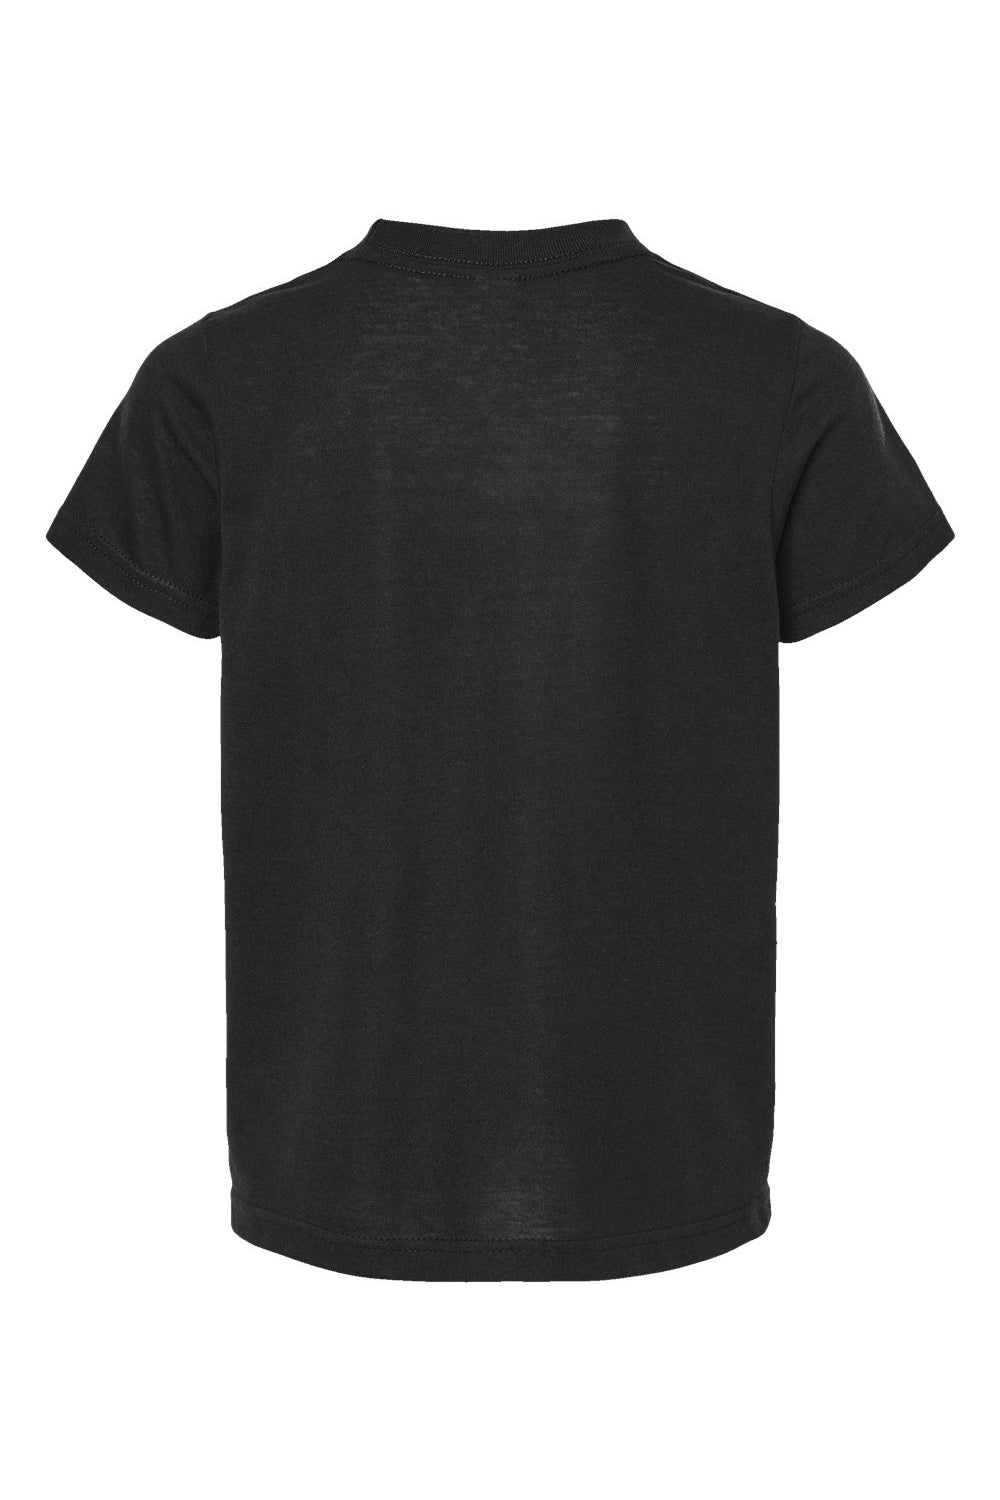 Tultex 265 Youth Poly-Rich Short Sleeve Crewneck T-Shirt Black Flat Back